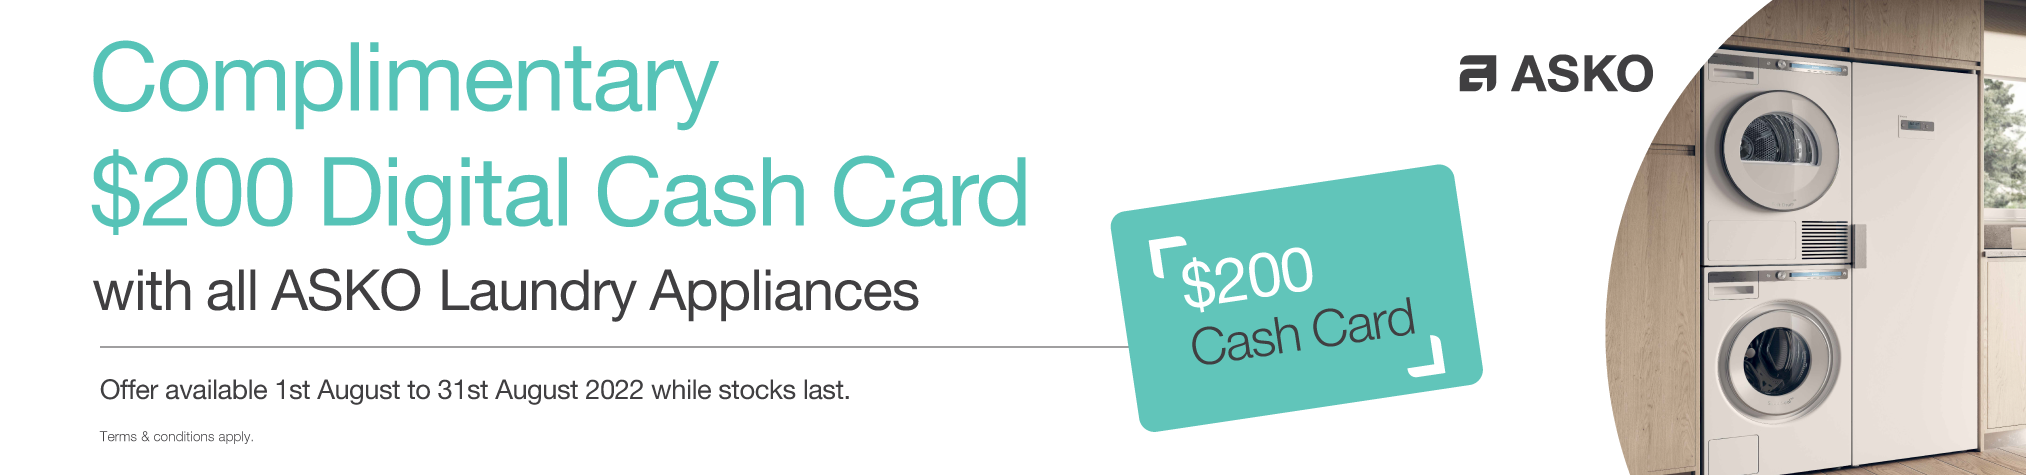 Bonus $200 Cash Card with selected Asko Laundry Appliances